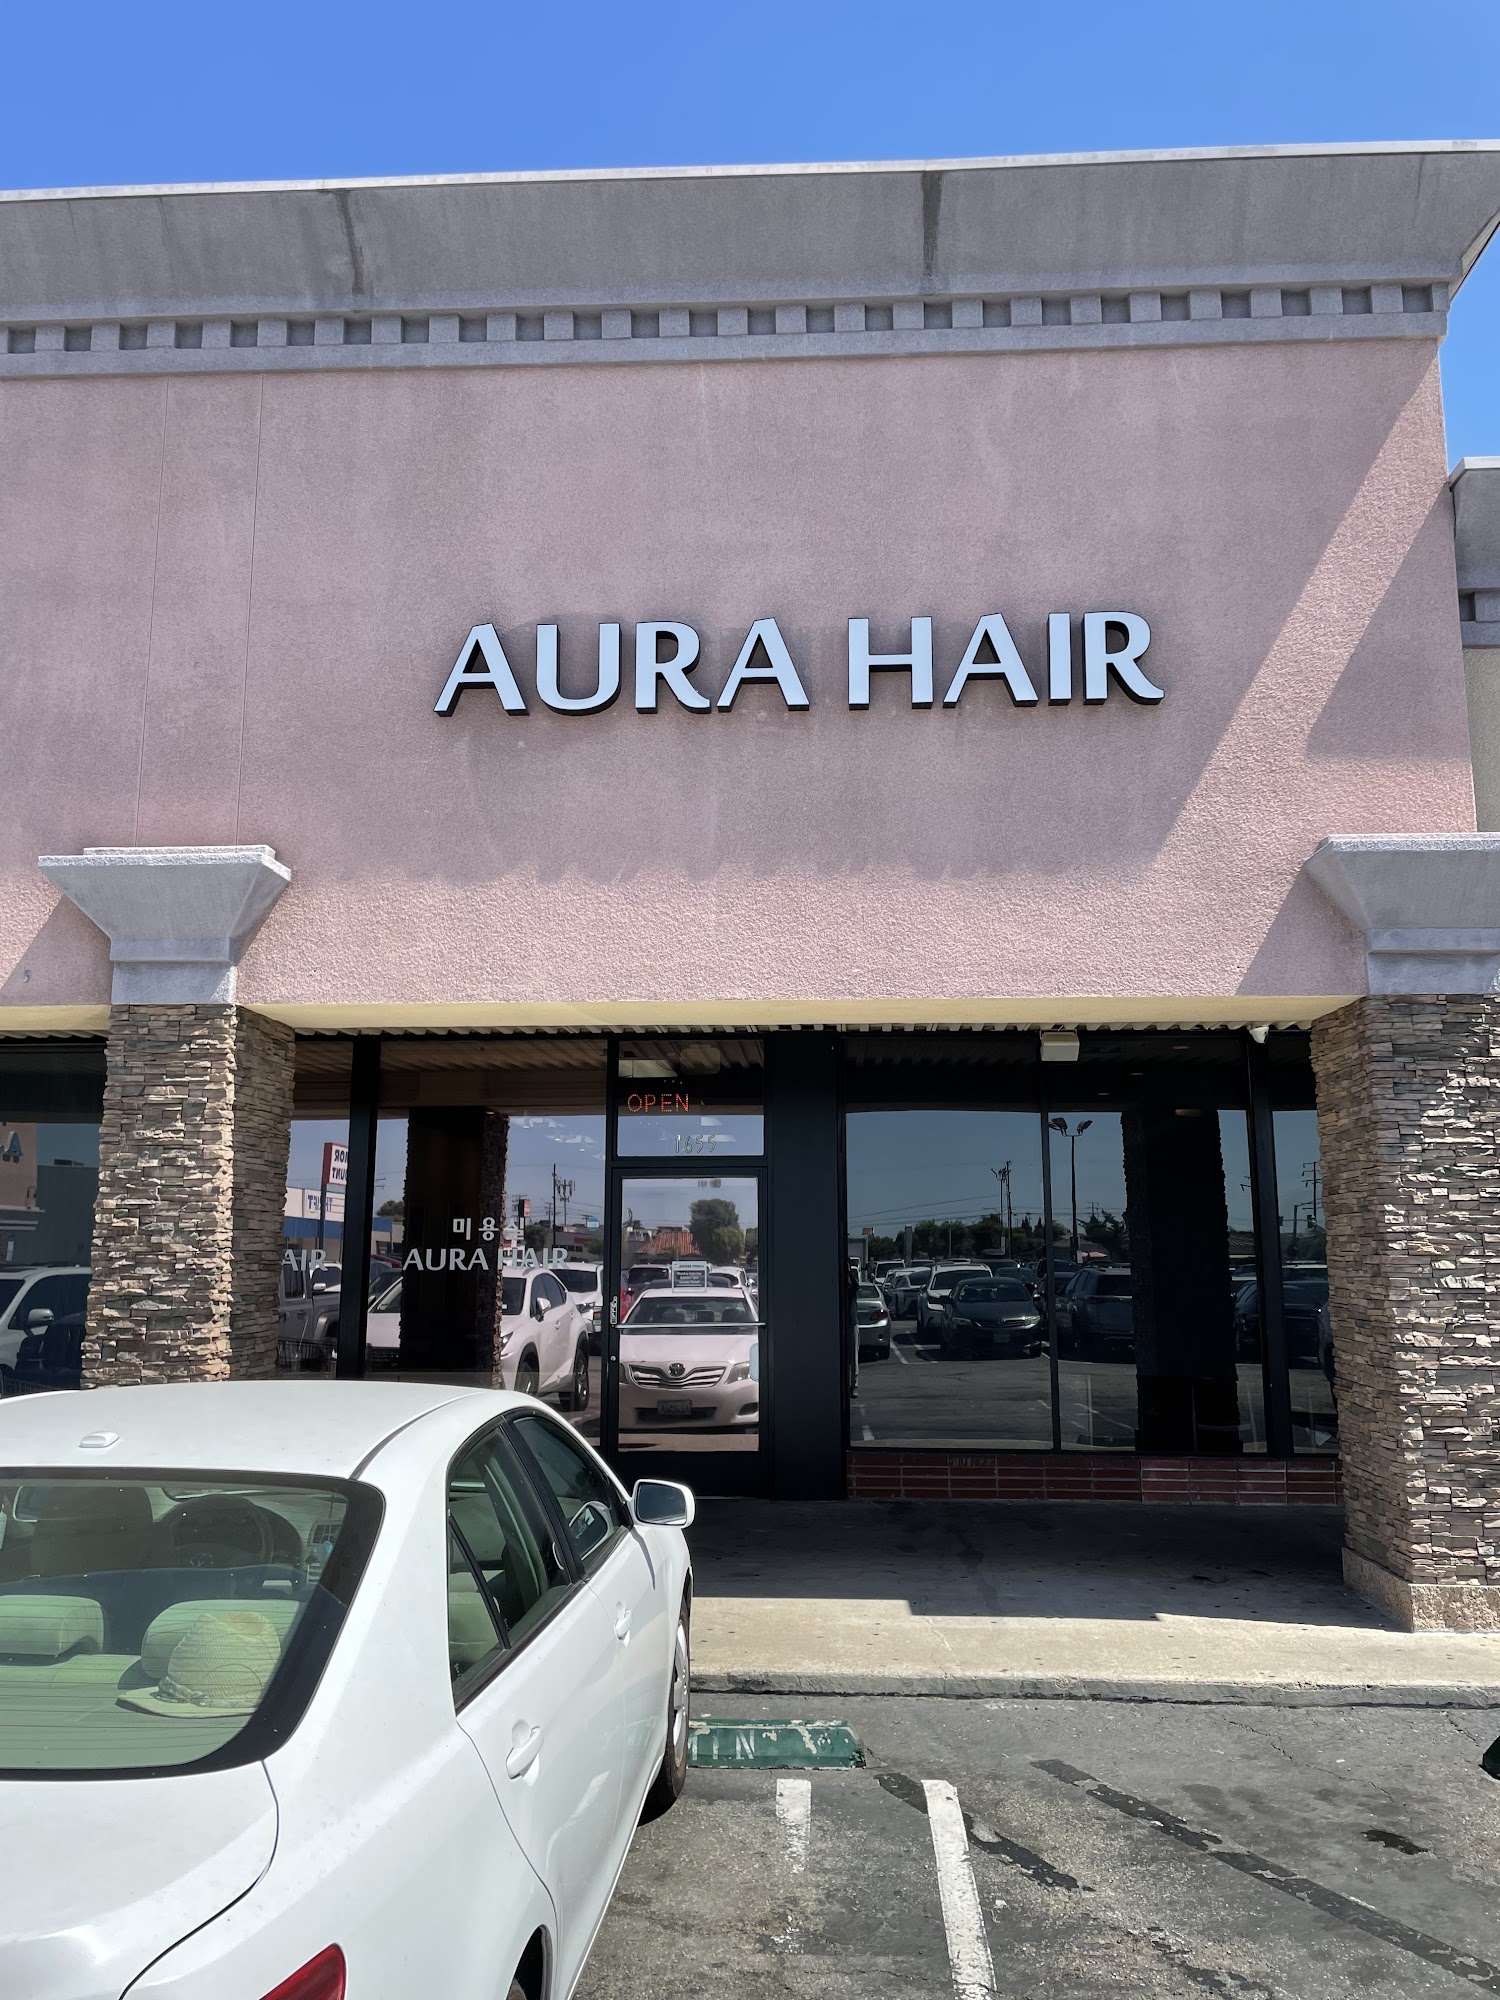 AURA HAIR